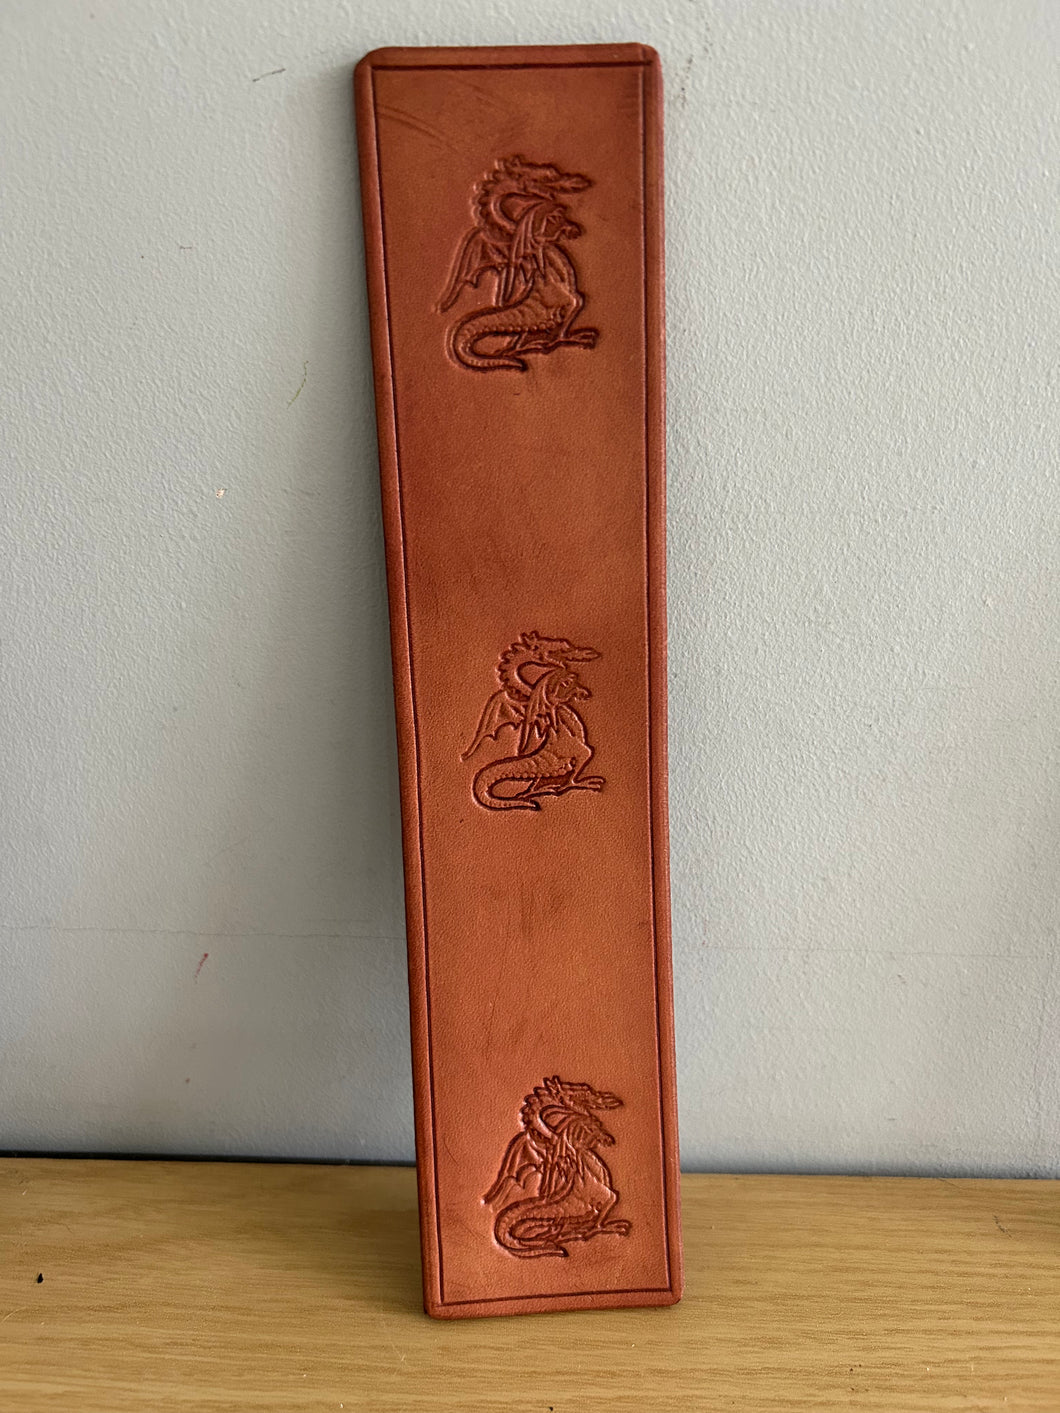 Leather Bookmark Dragon Handmade Free UK Postage